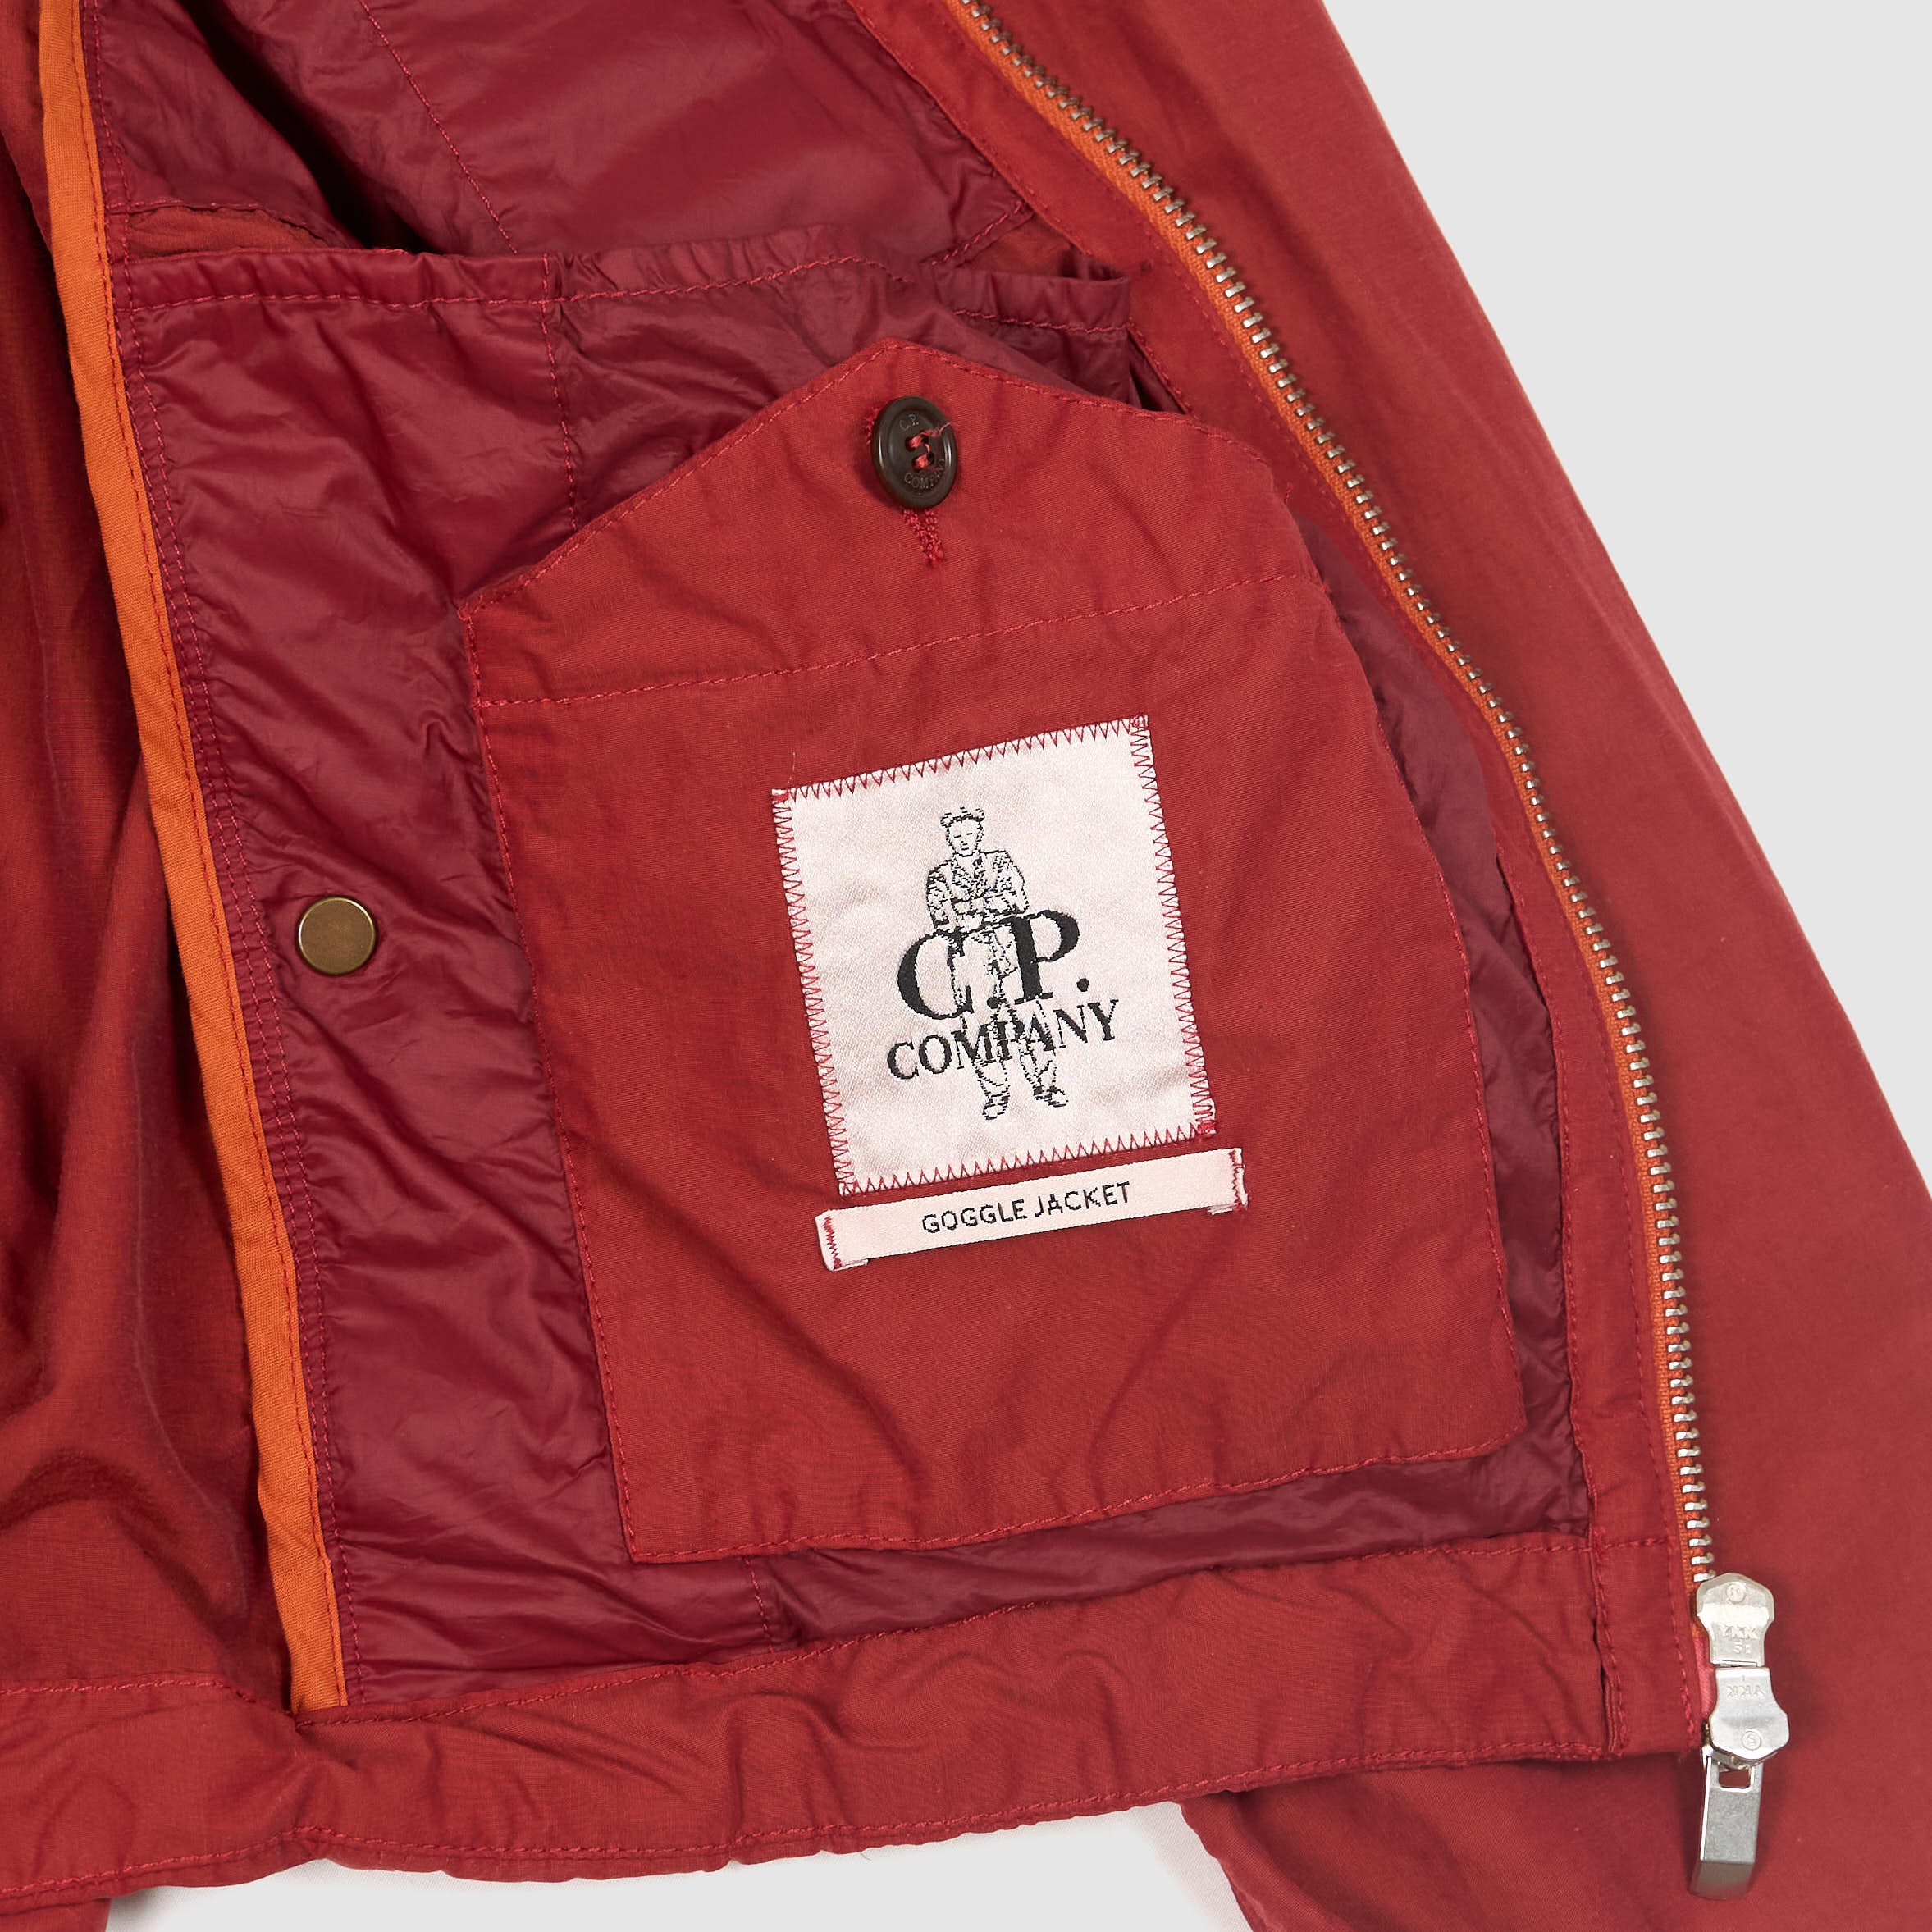 C.P. COMPANY CHROME RE COLOUR GOGGLE JACKET - X Clothing